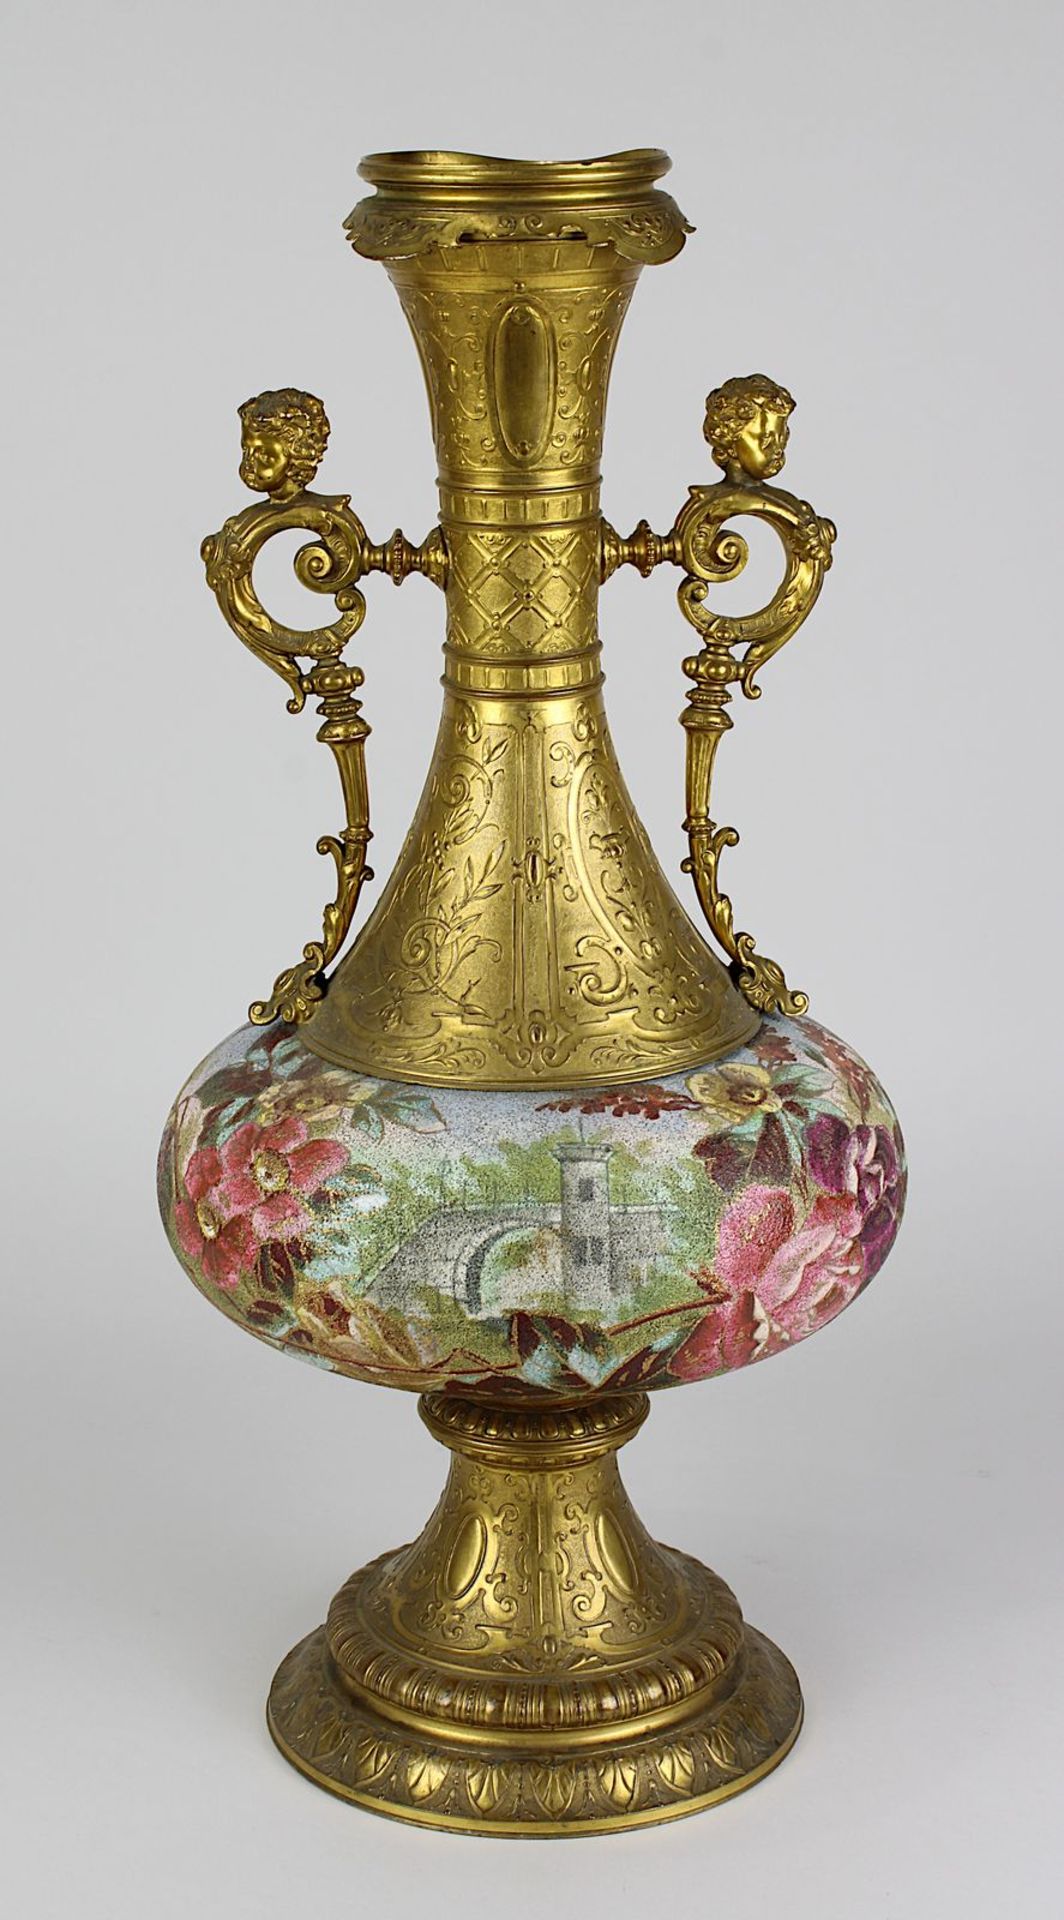 Historismus-Prunkvase aus Keramik mit Metallmontur, deutsch um 1880, Keramikkorpus floral